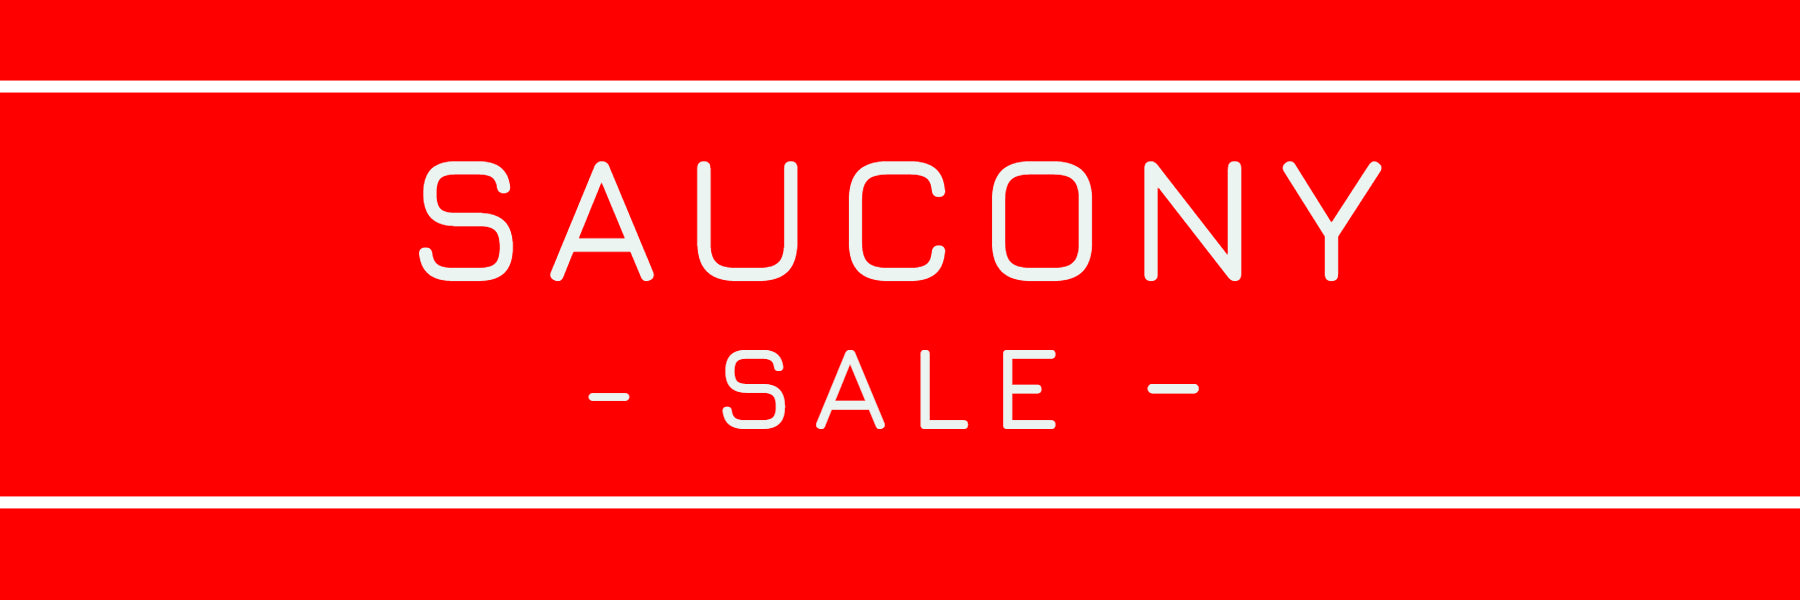 Saucony-Sale